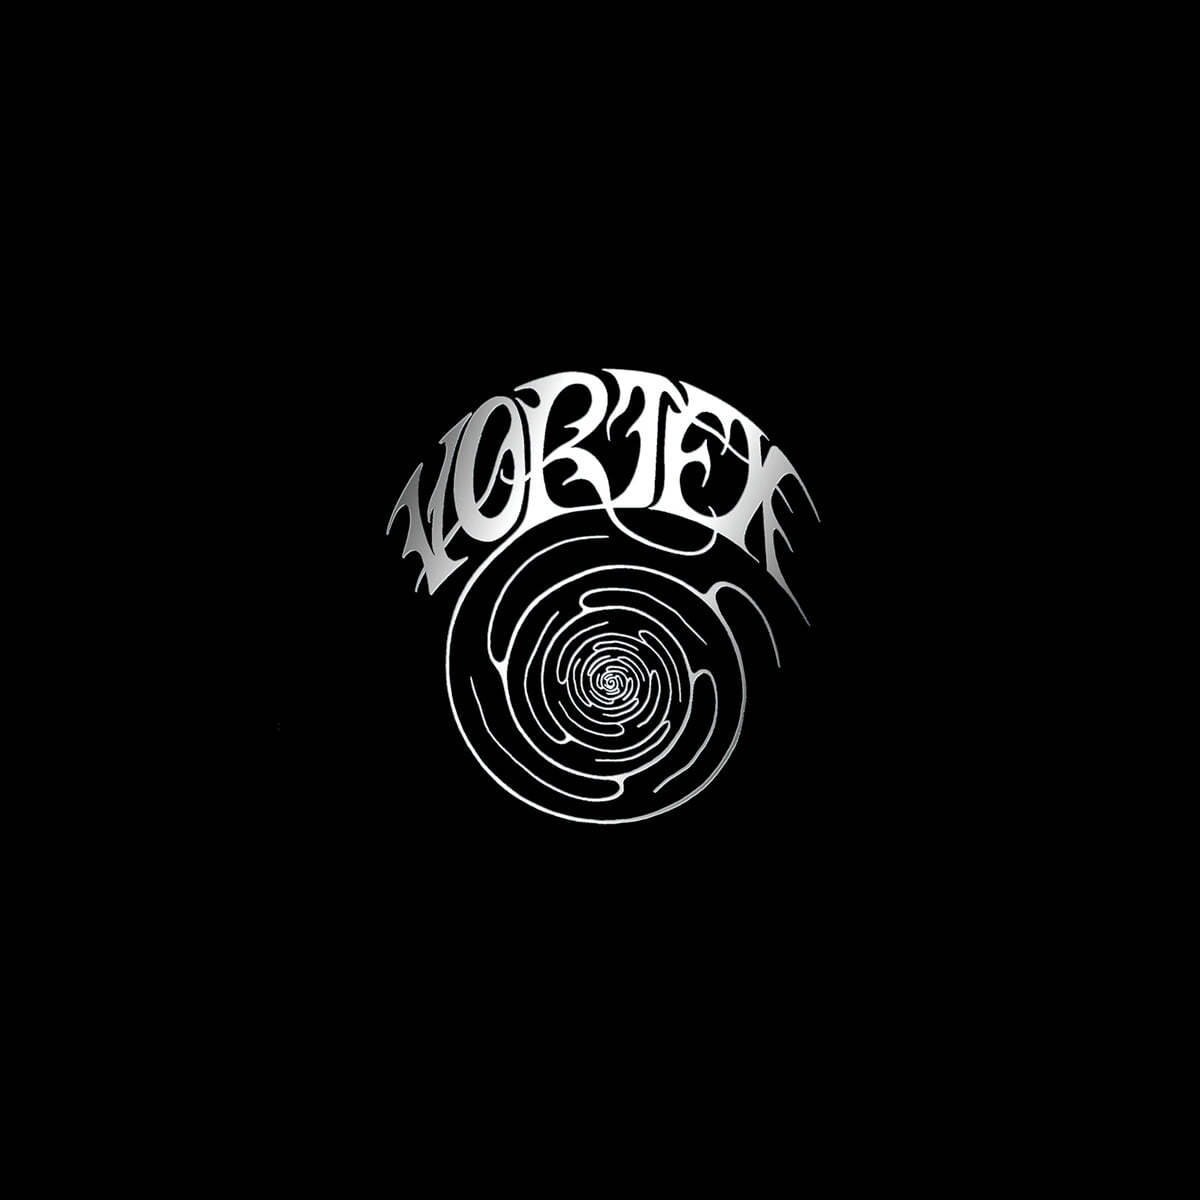 VORTEX (보텍스) - Complete Recordings 1975-1979 [3LP]